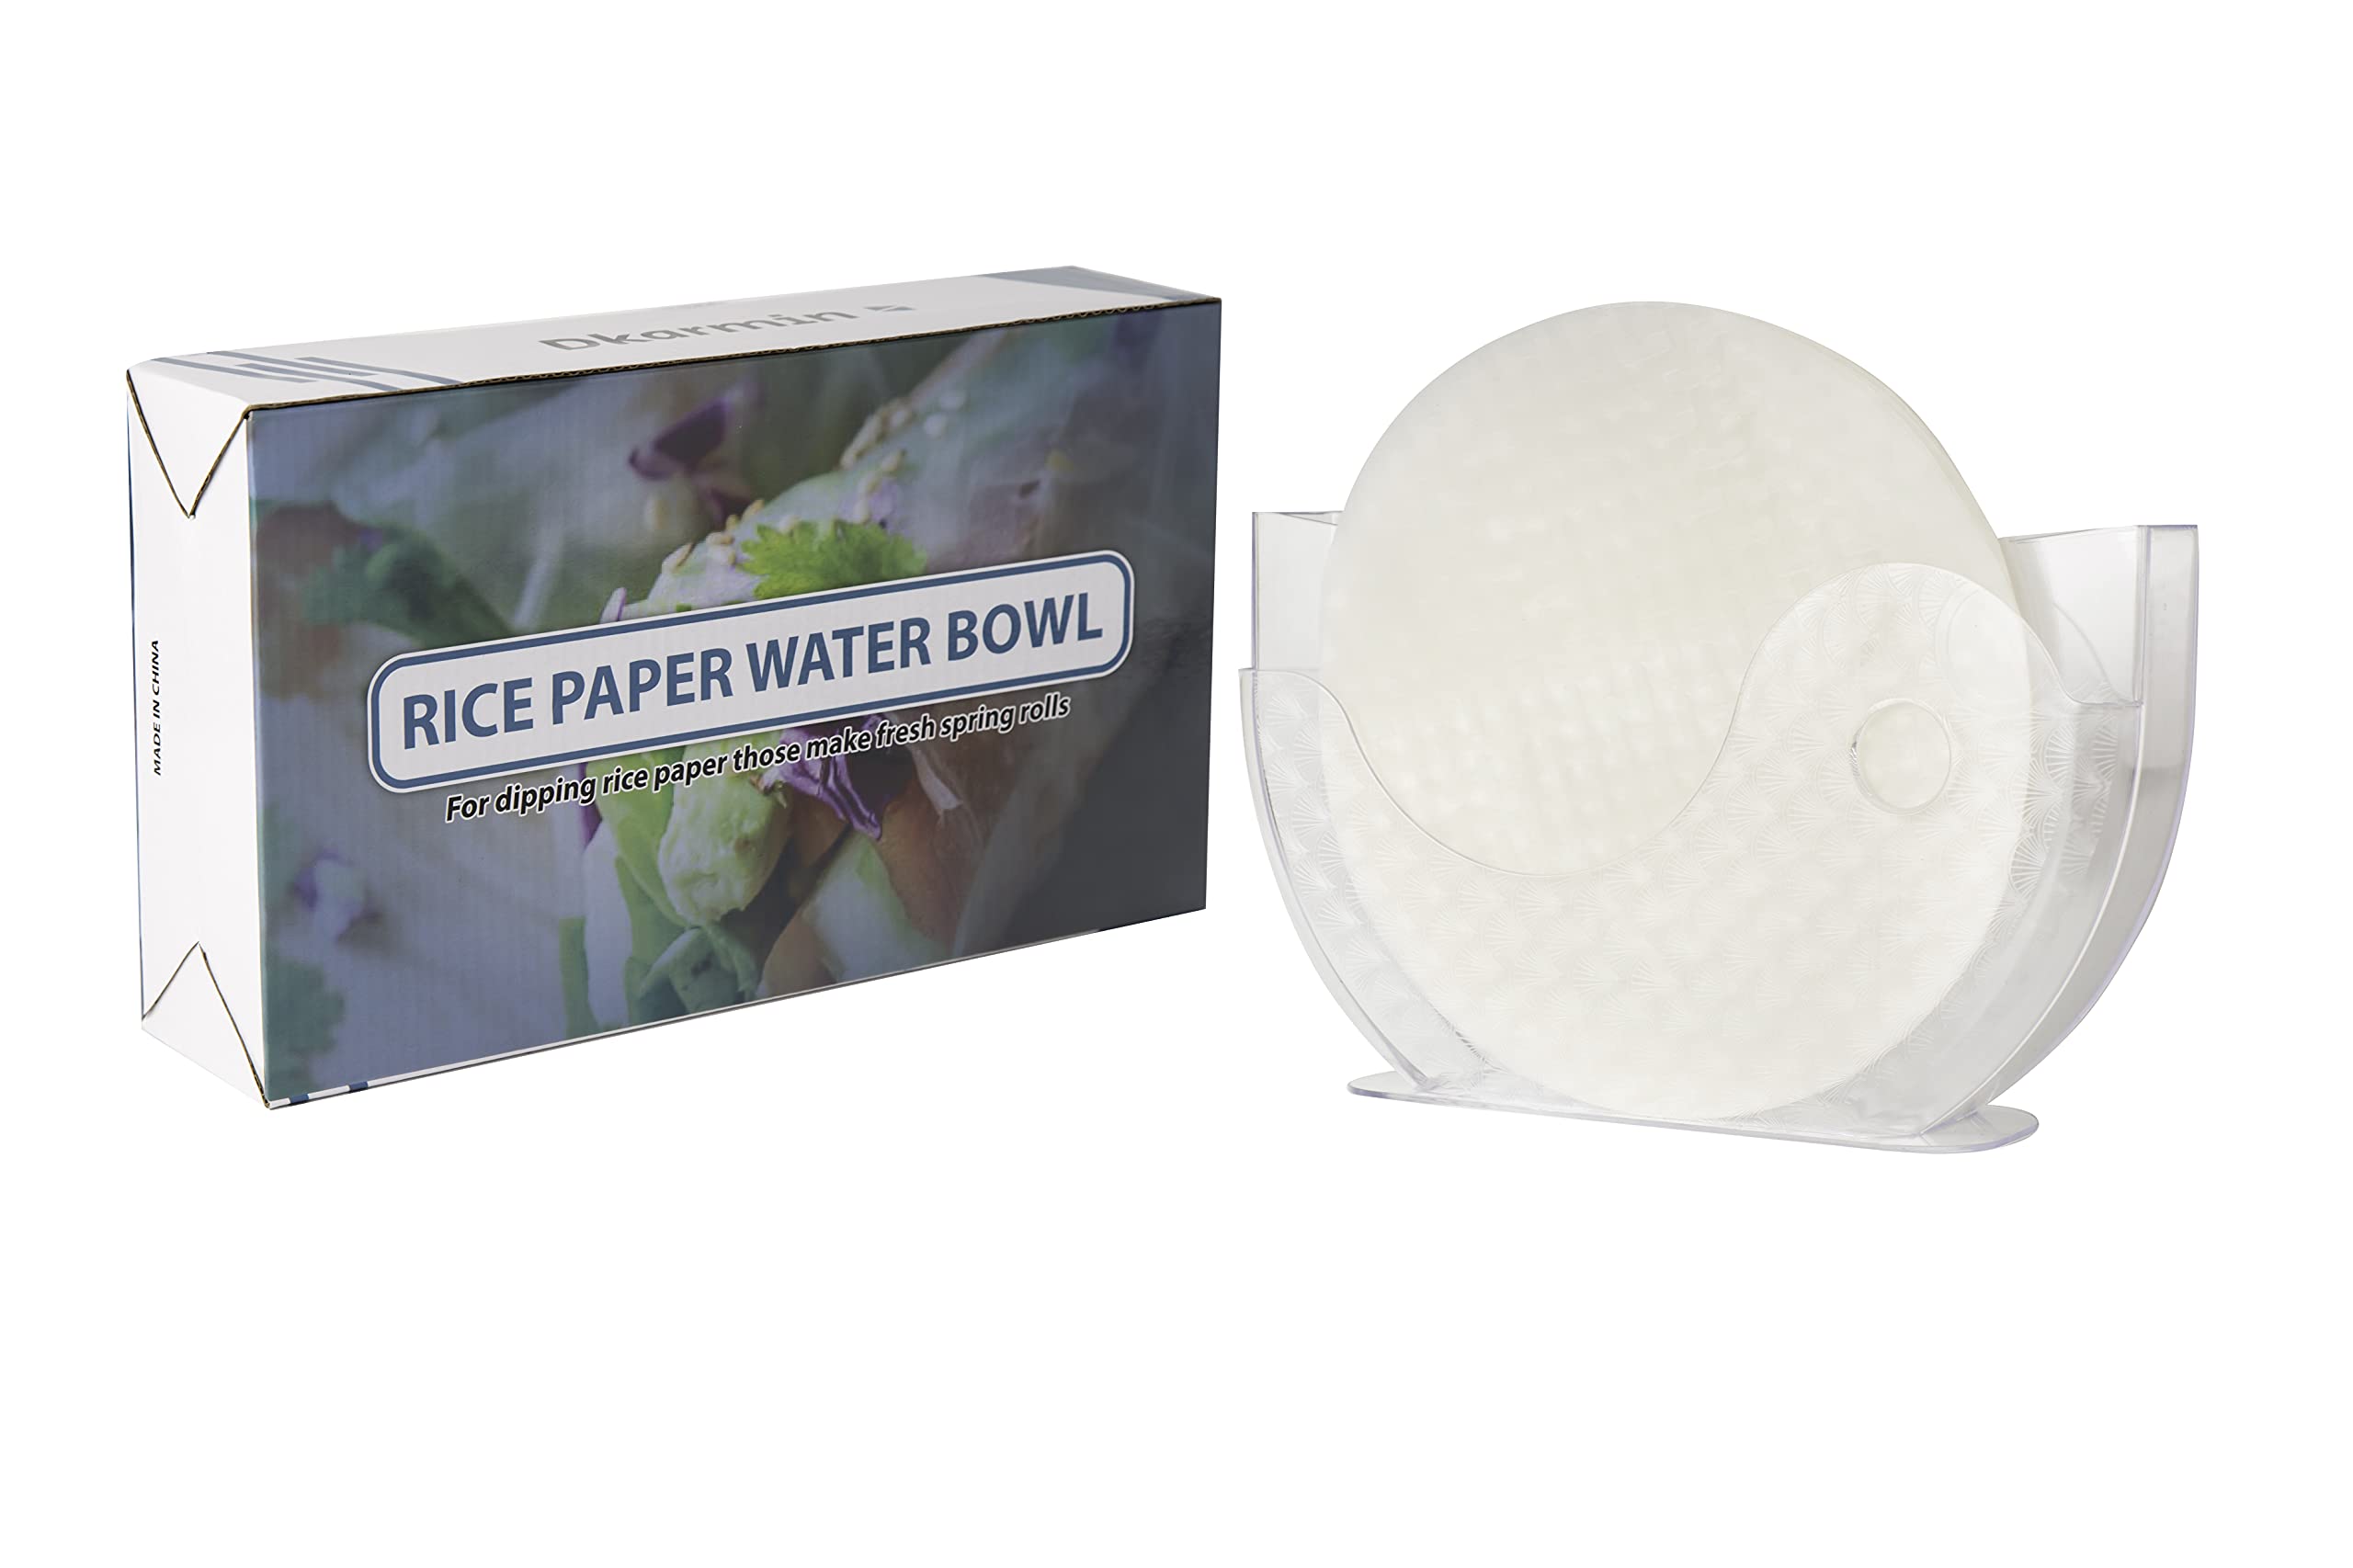 Dkarmin Rice Paper Water Bowl, Spring Roll Water Bowl, Vietnamese Spring Roll Wrapper, Water Bowl for soaking Rice Paper to make Spring Rolls, Banh trang holder